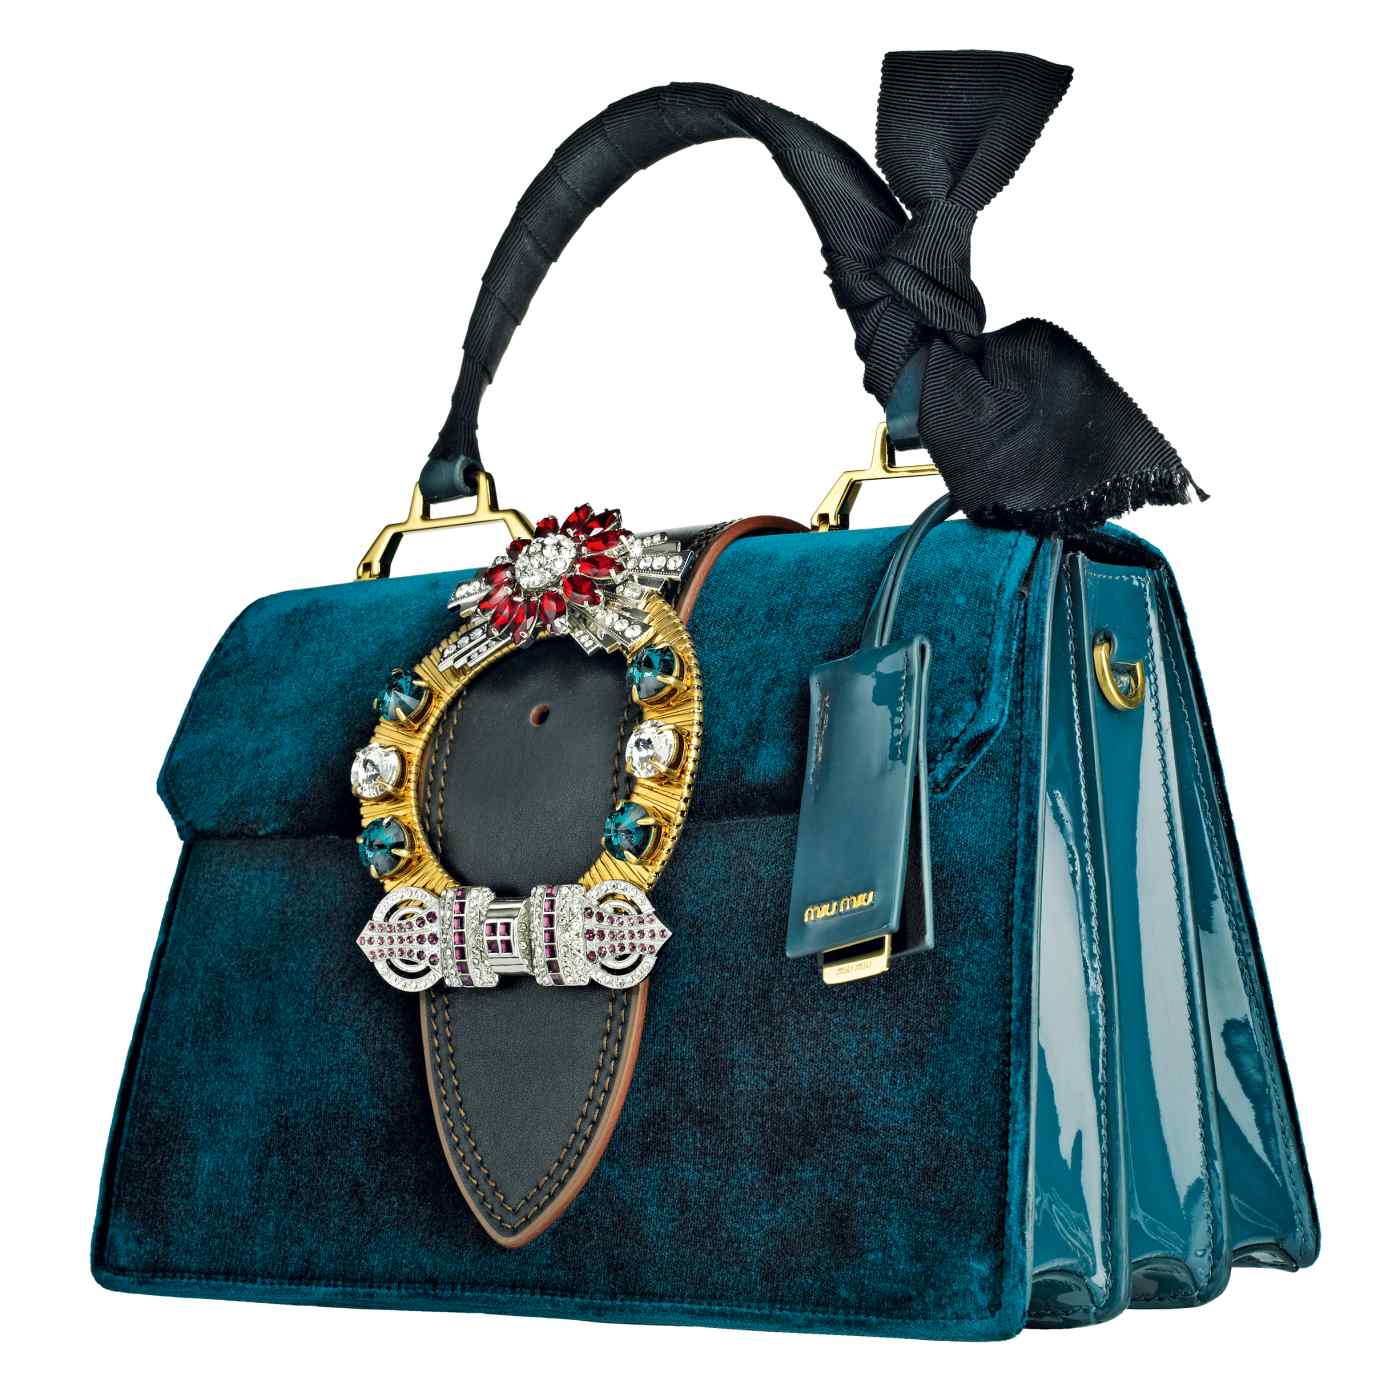 Miu Miu crystal-embellished handbag | How To Spend It